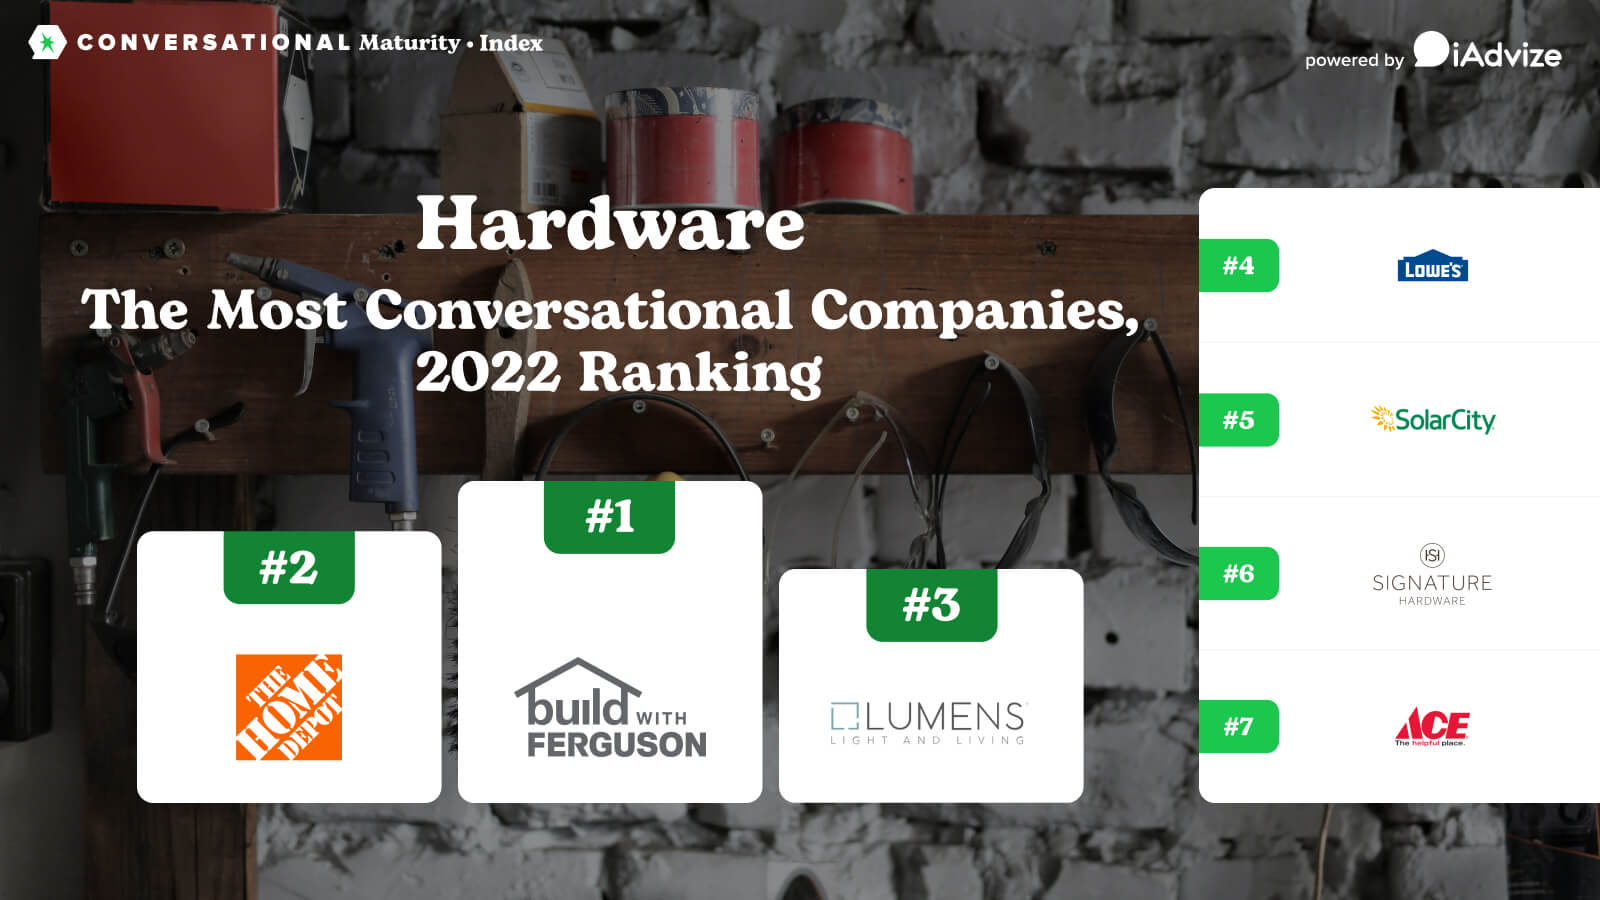 Conversational Maturity Index: Hardware Companies 2022 Ranking